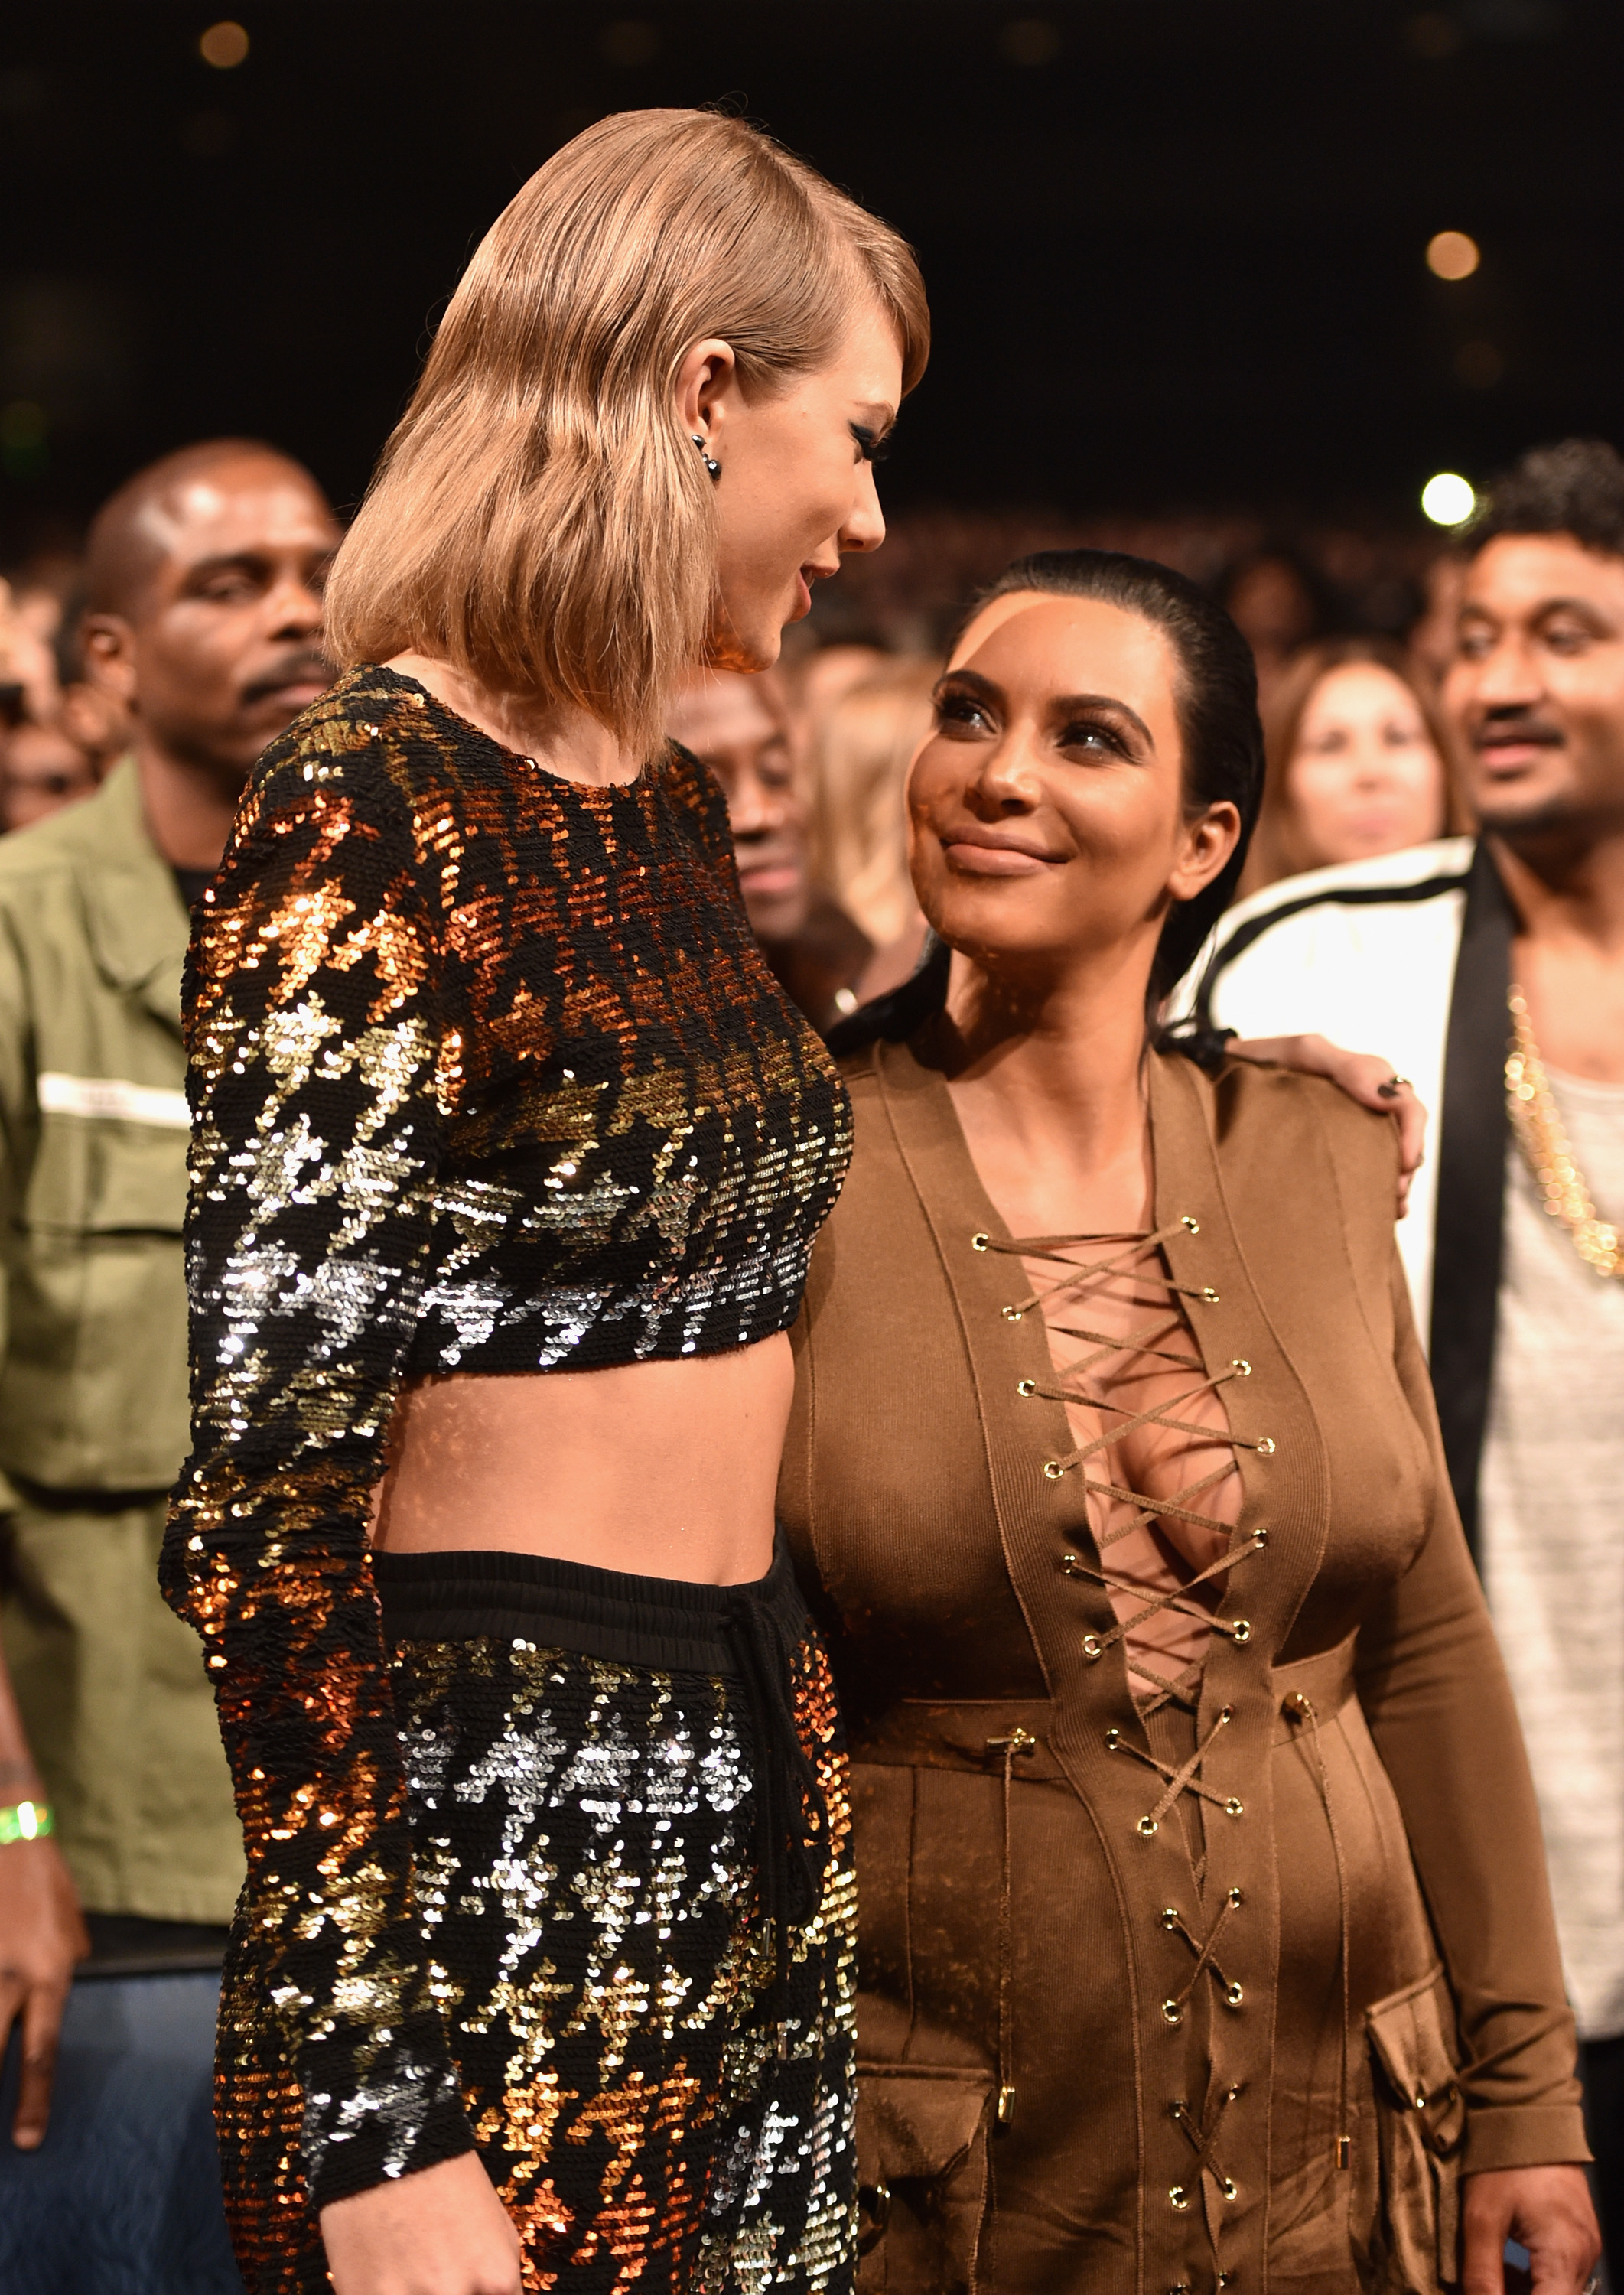 Closeup of Taylor Swift and Kim Kardashian at an event